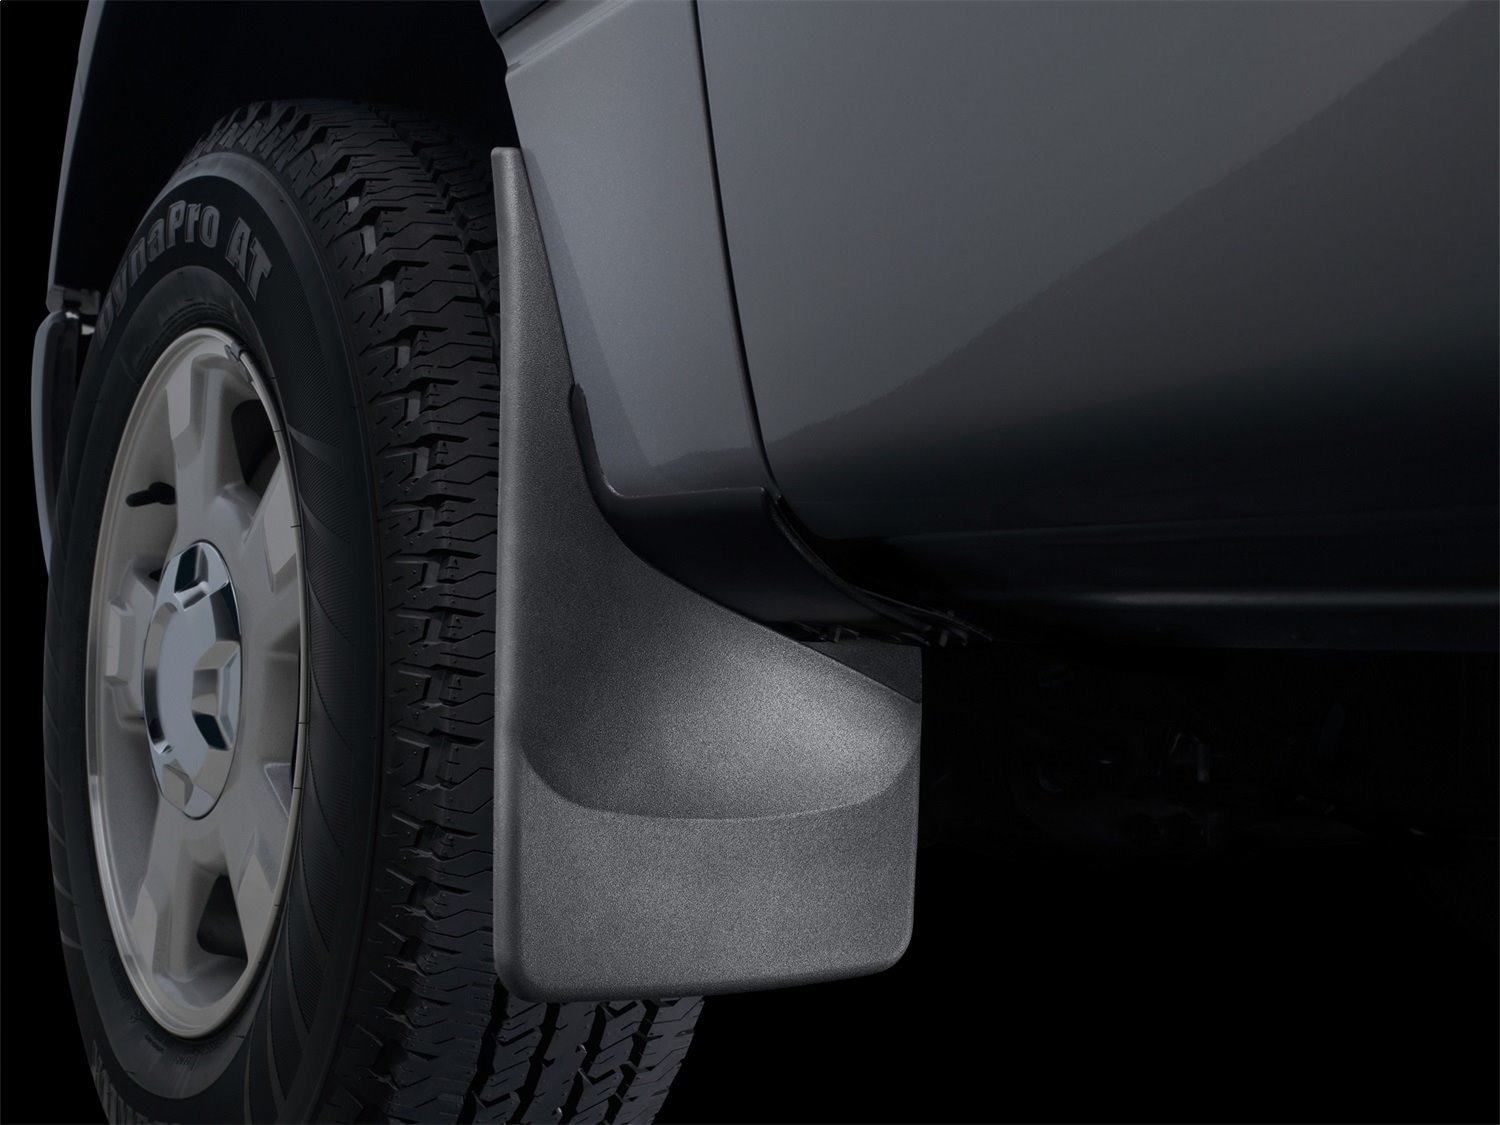 Digital-Fit Front MudFlaps Fits Late-Model Chevrolet Suburban, Tahoe/XL, GMC Yukon/XL